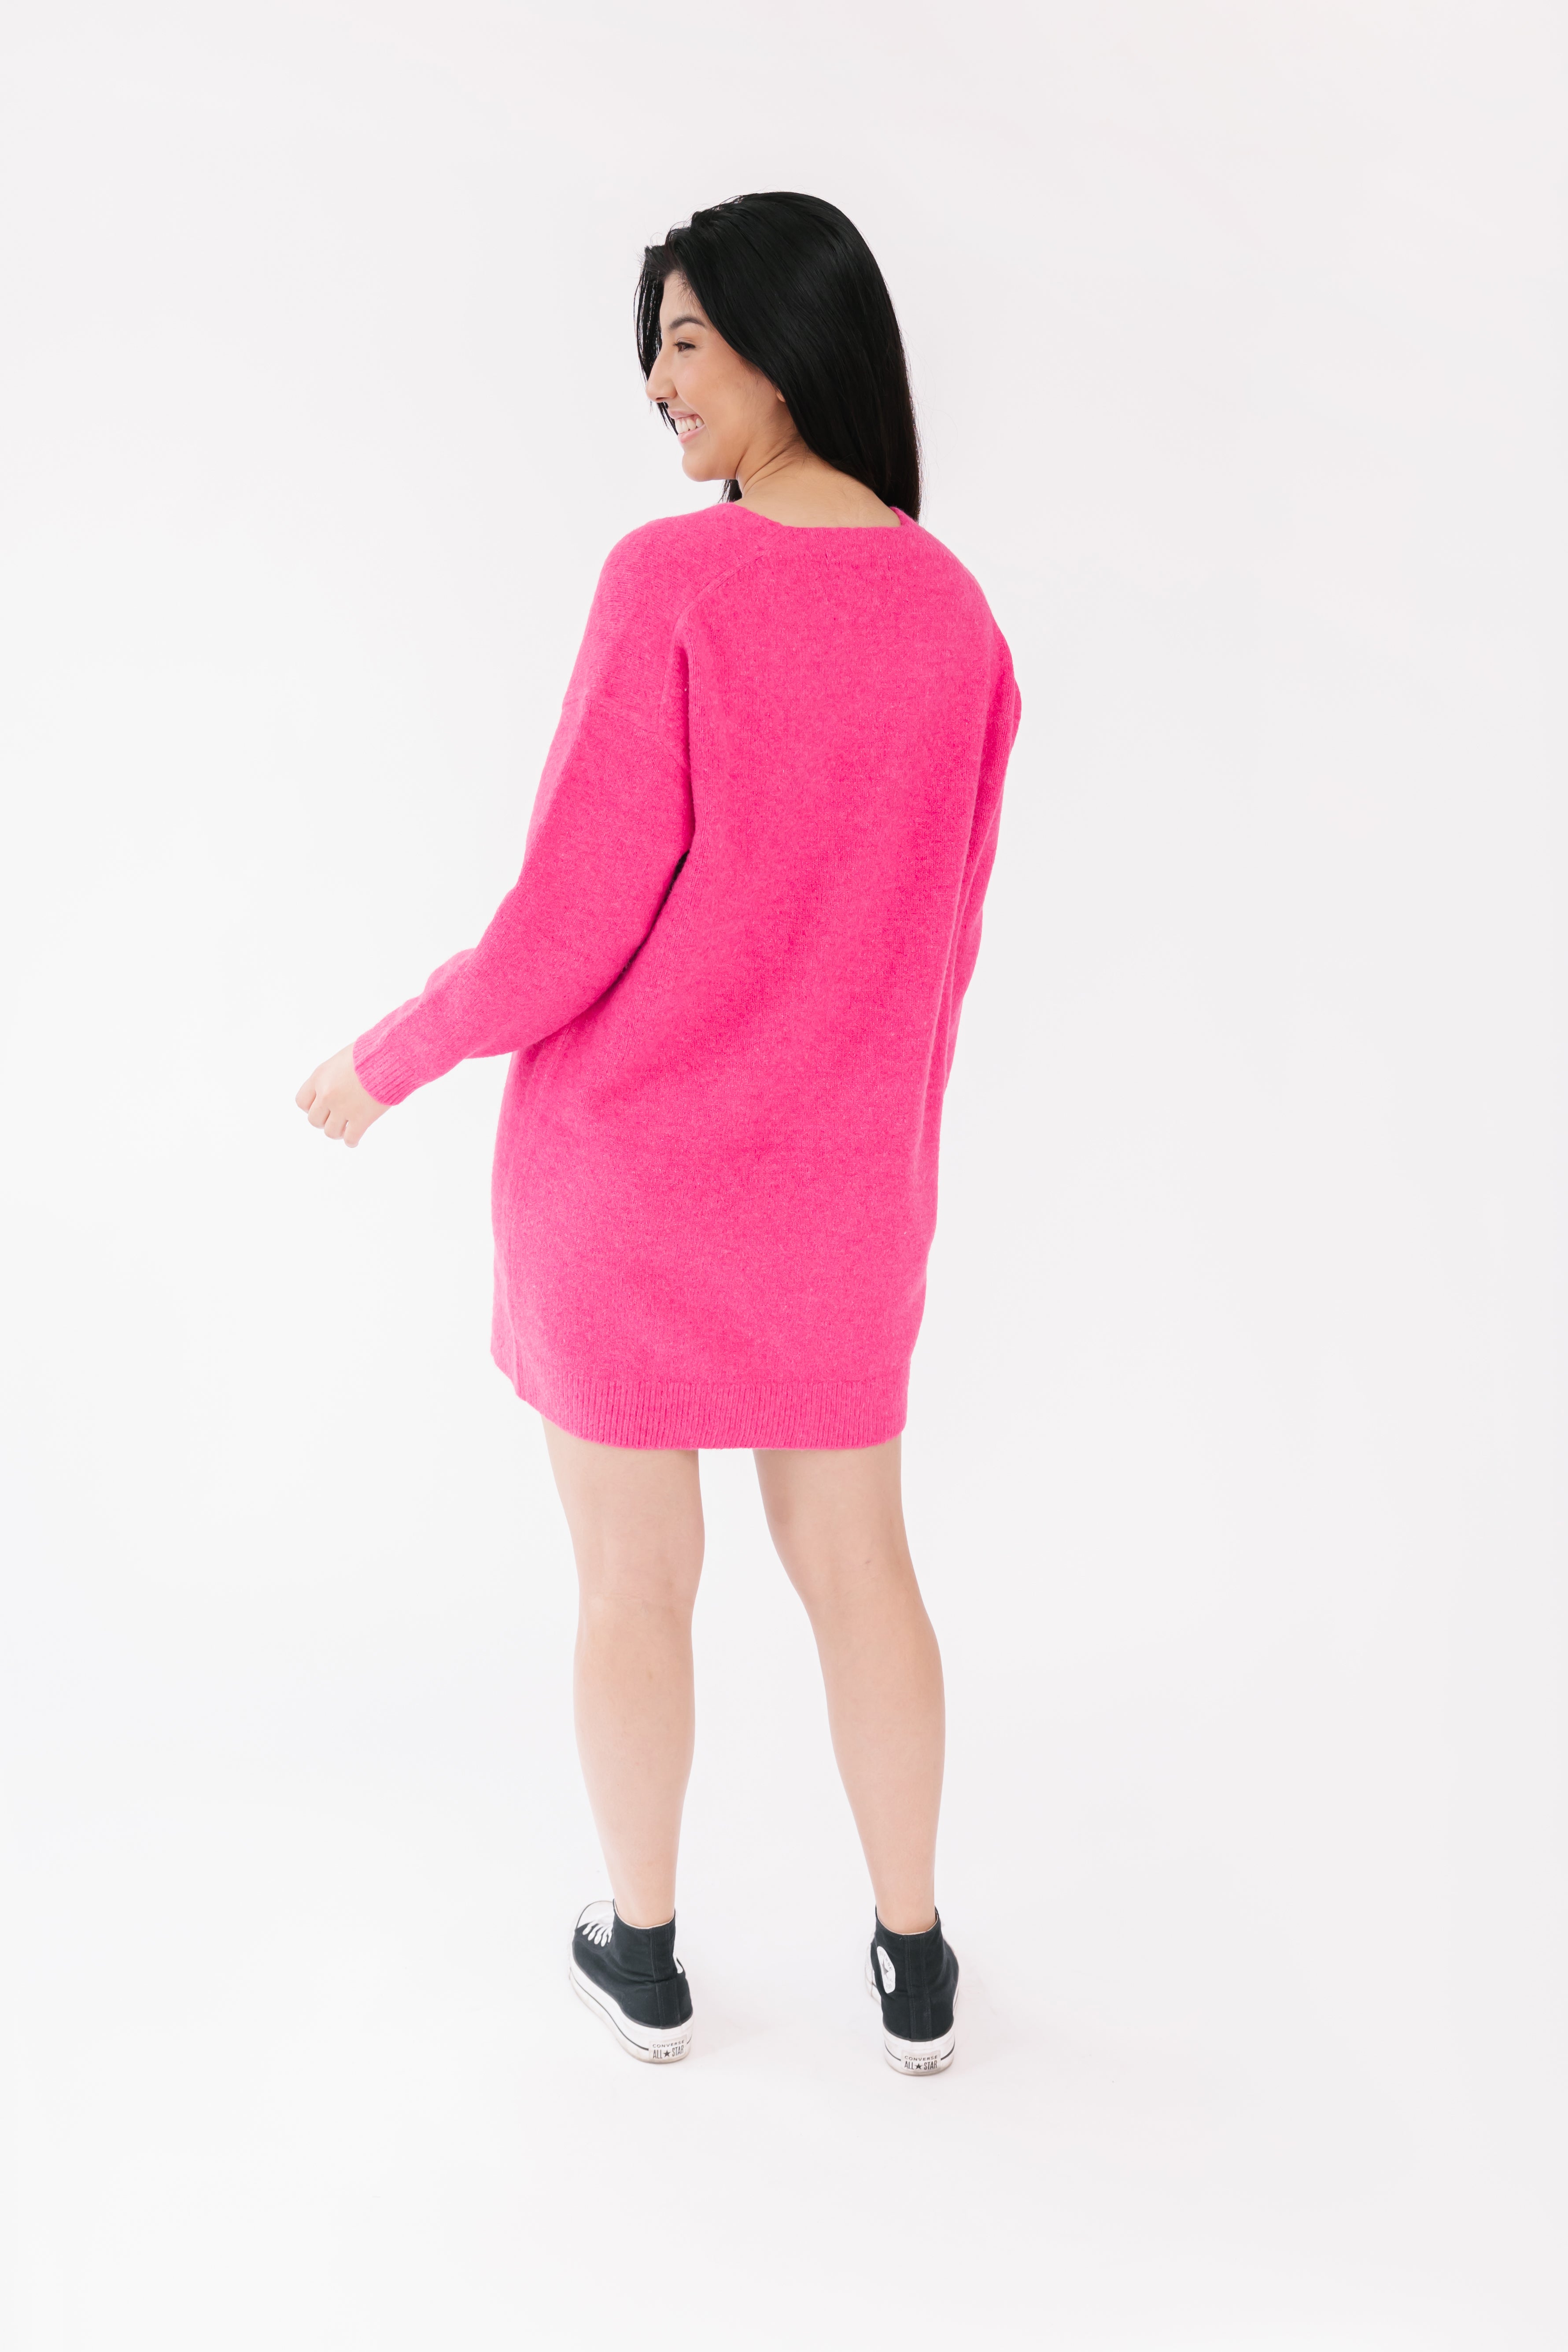 Jillian Harris and Smash + Tess Sweater Weather Mini Dress in Cranberry